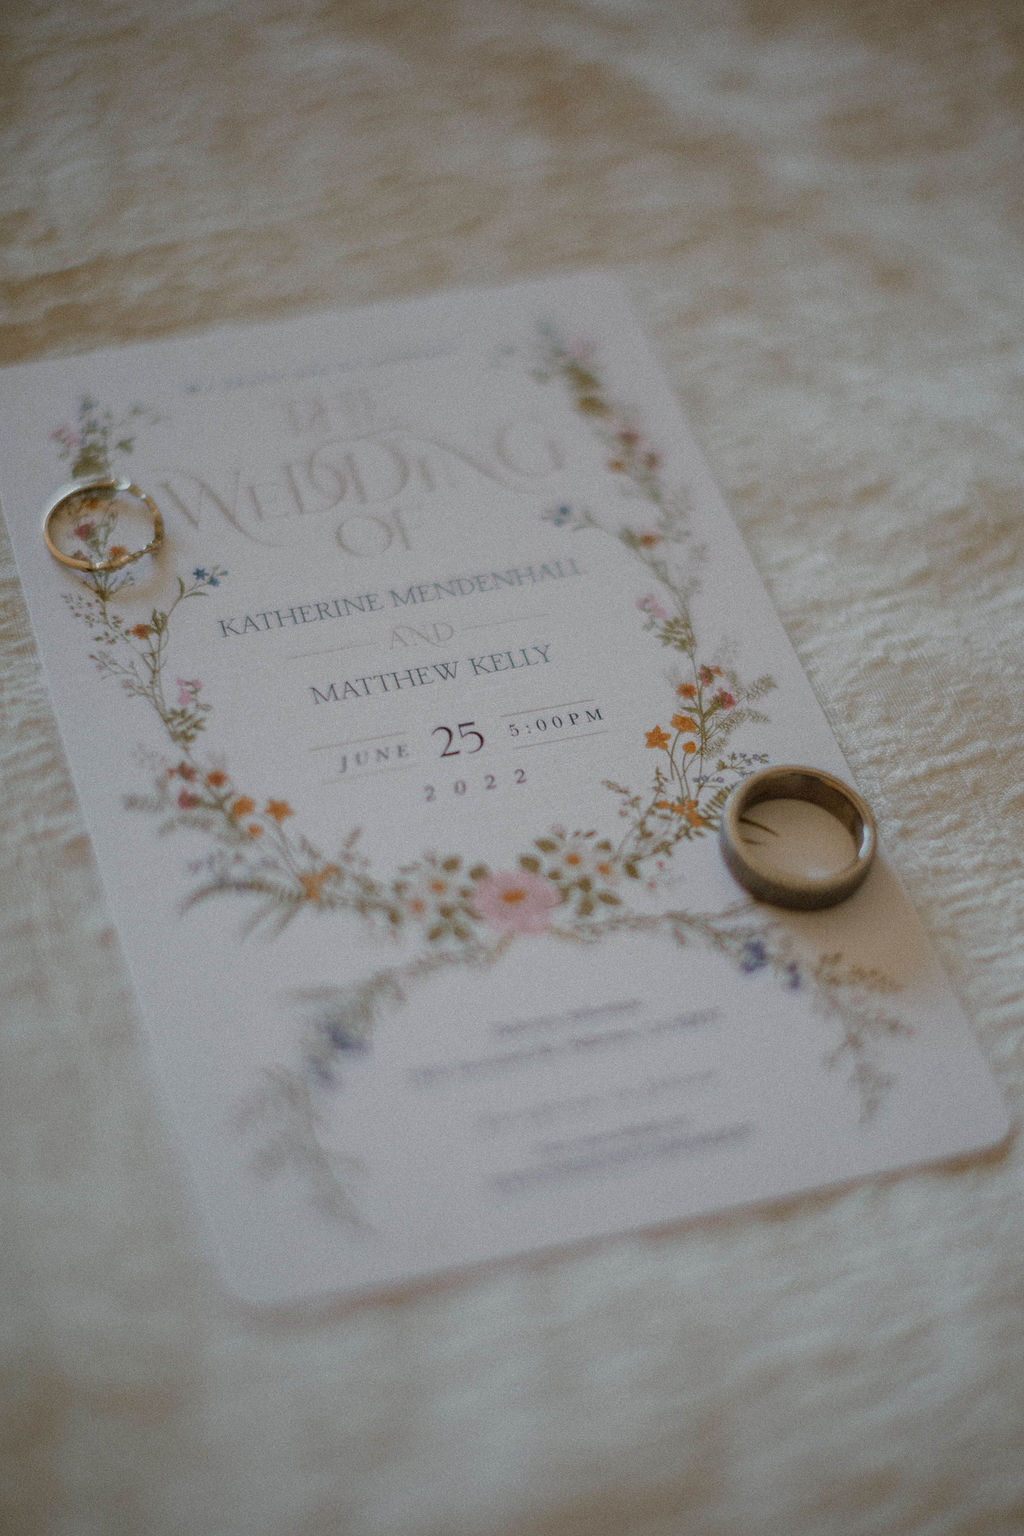 the wedding details